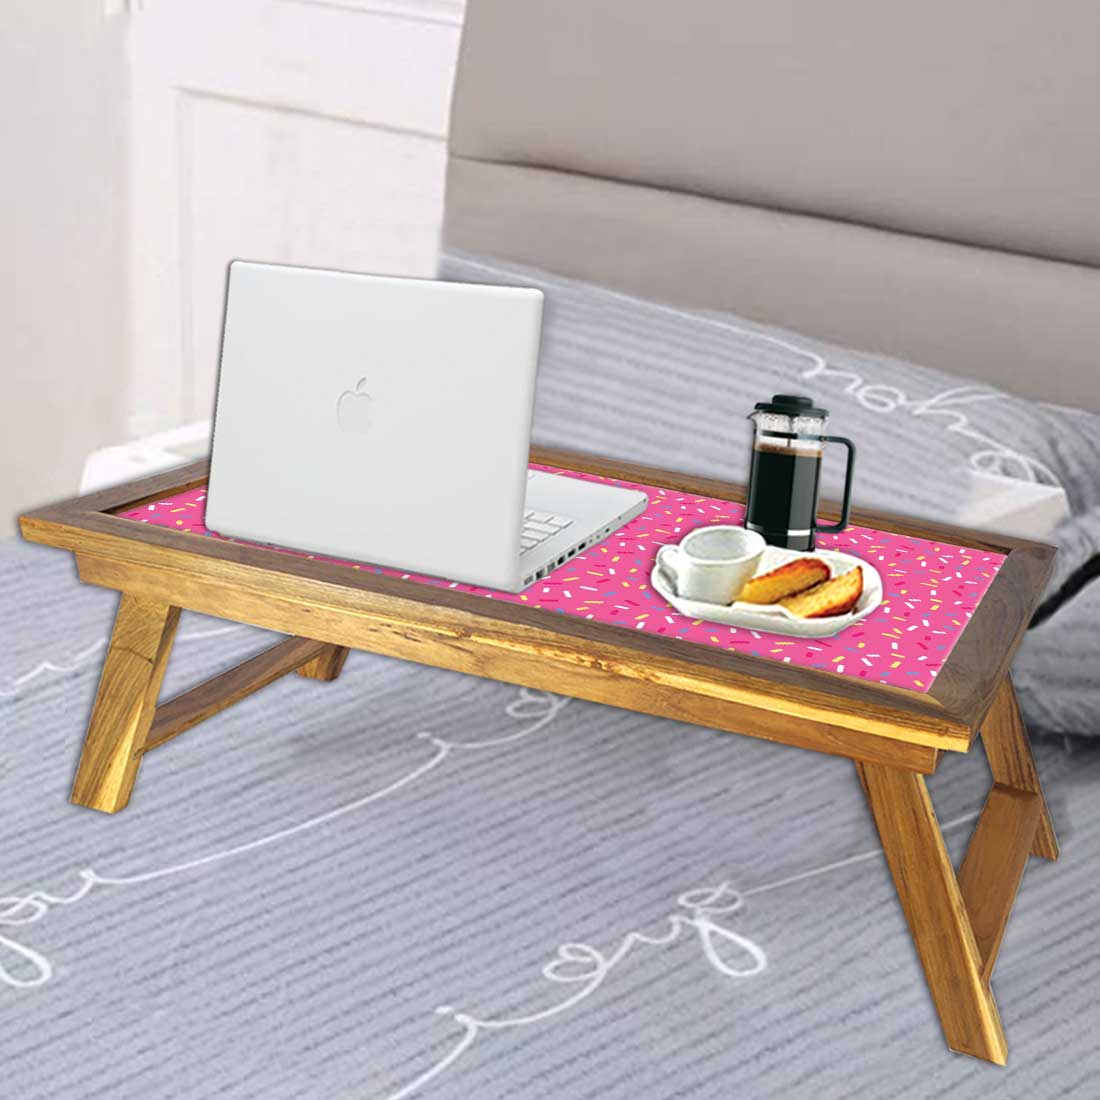 Nutcase Folding Laptop Table For Home Bed Lapdesk Breakfast Table Foldable Teak Wooden Study Desk - Pink Dots Nutcase